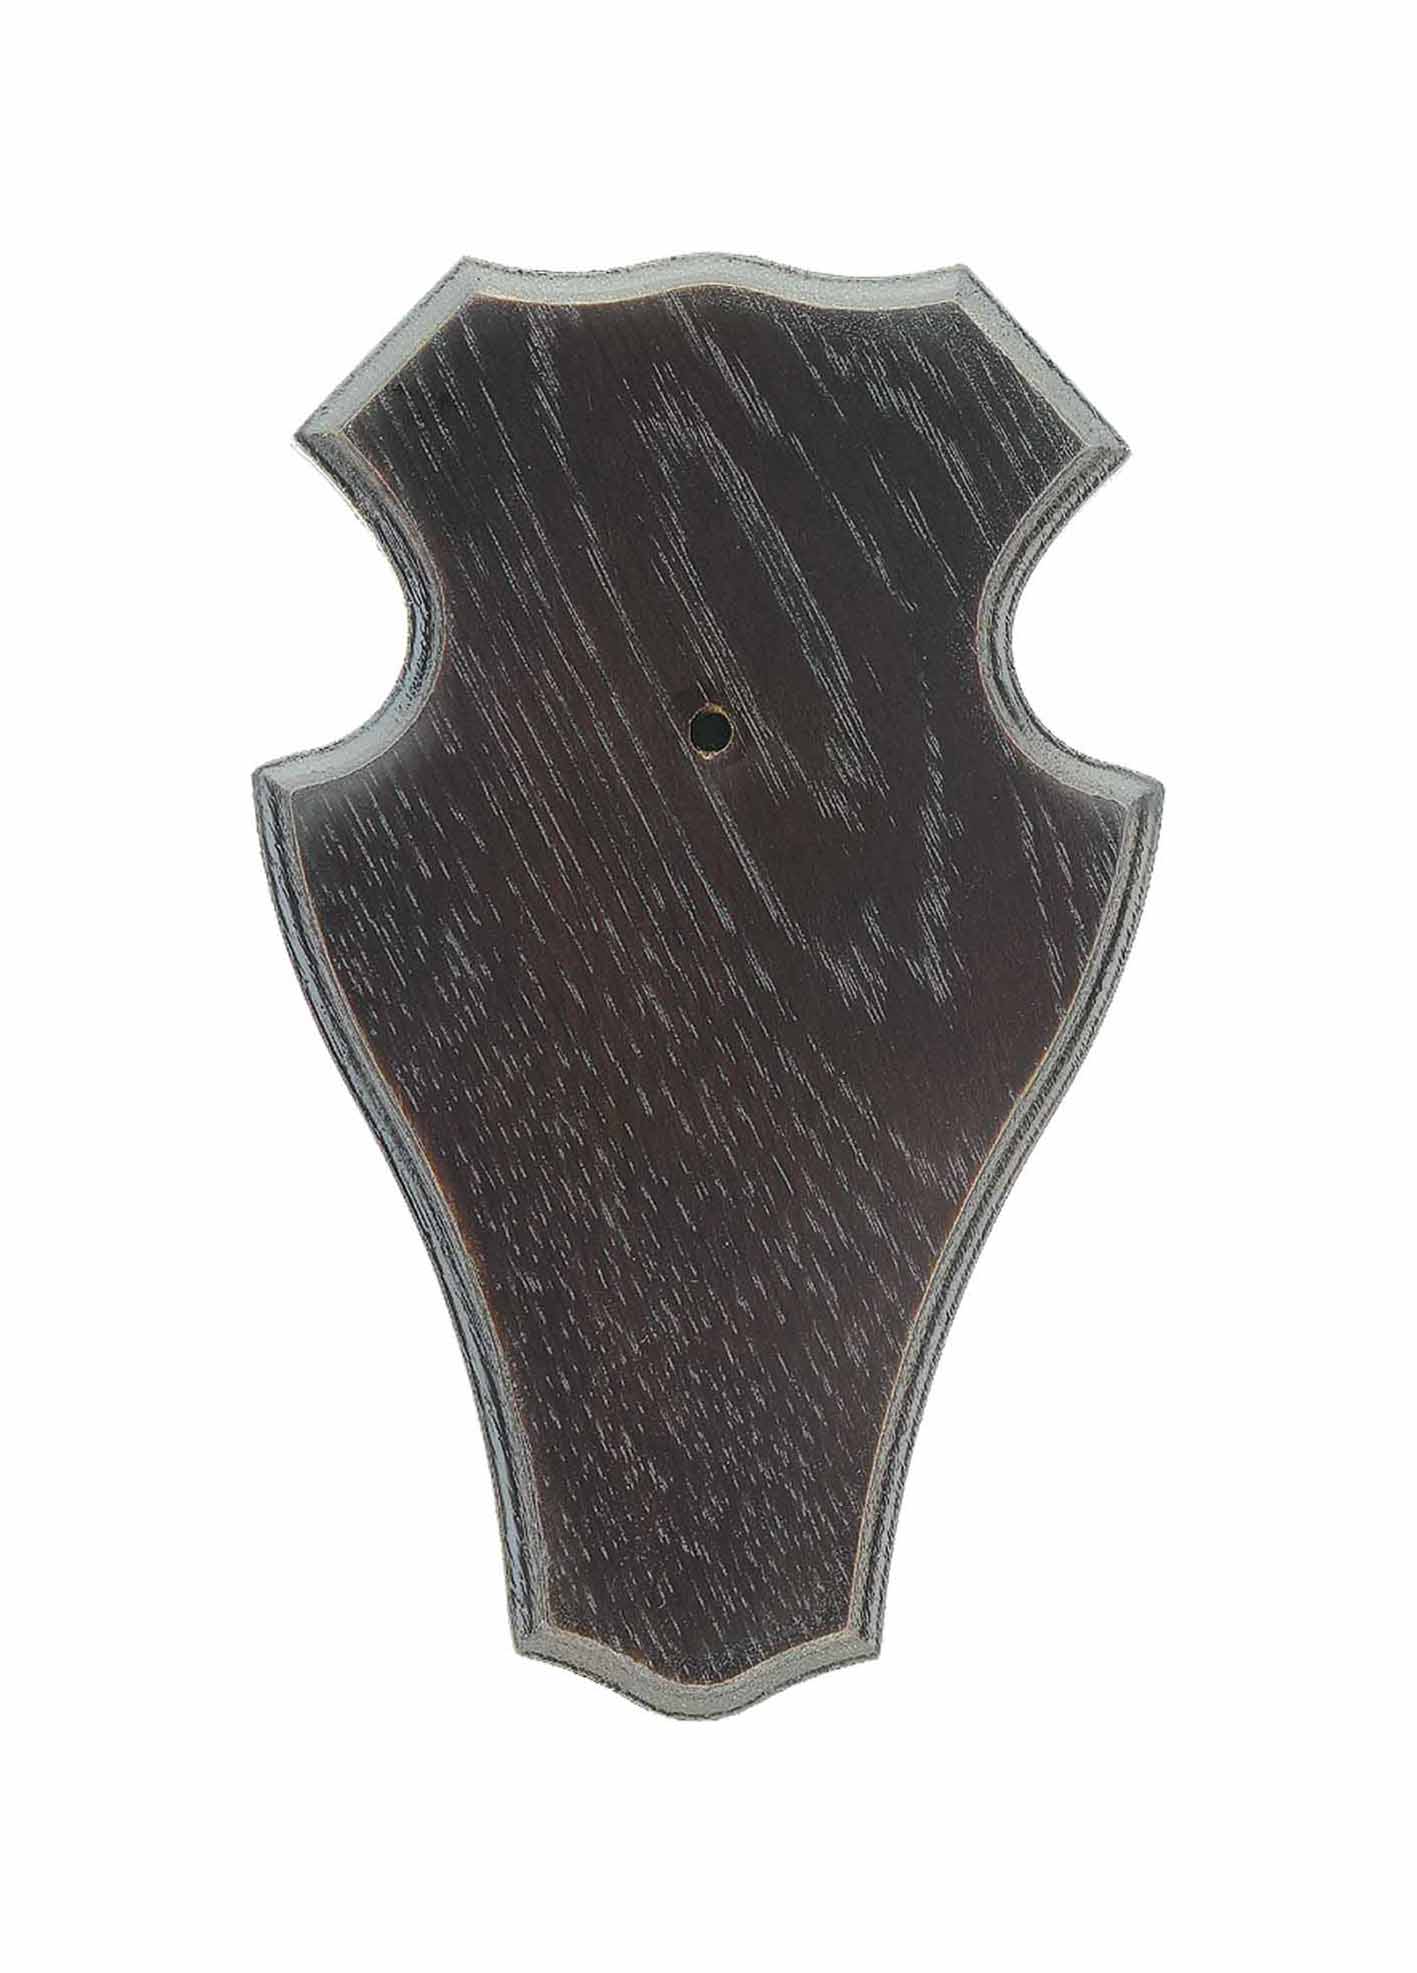 Oak Deer Trophy Plate 1 - 19x12 cm Dark